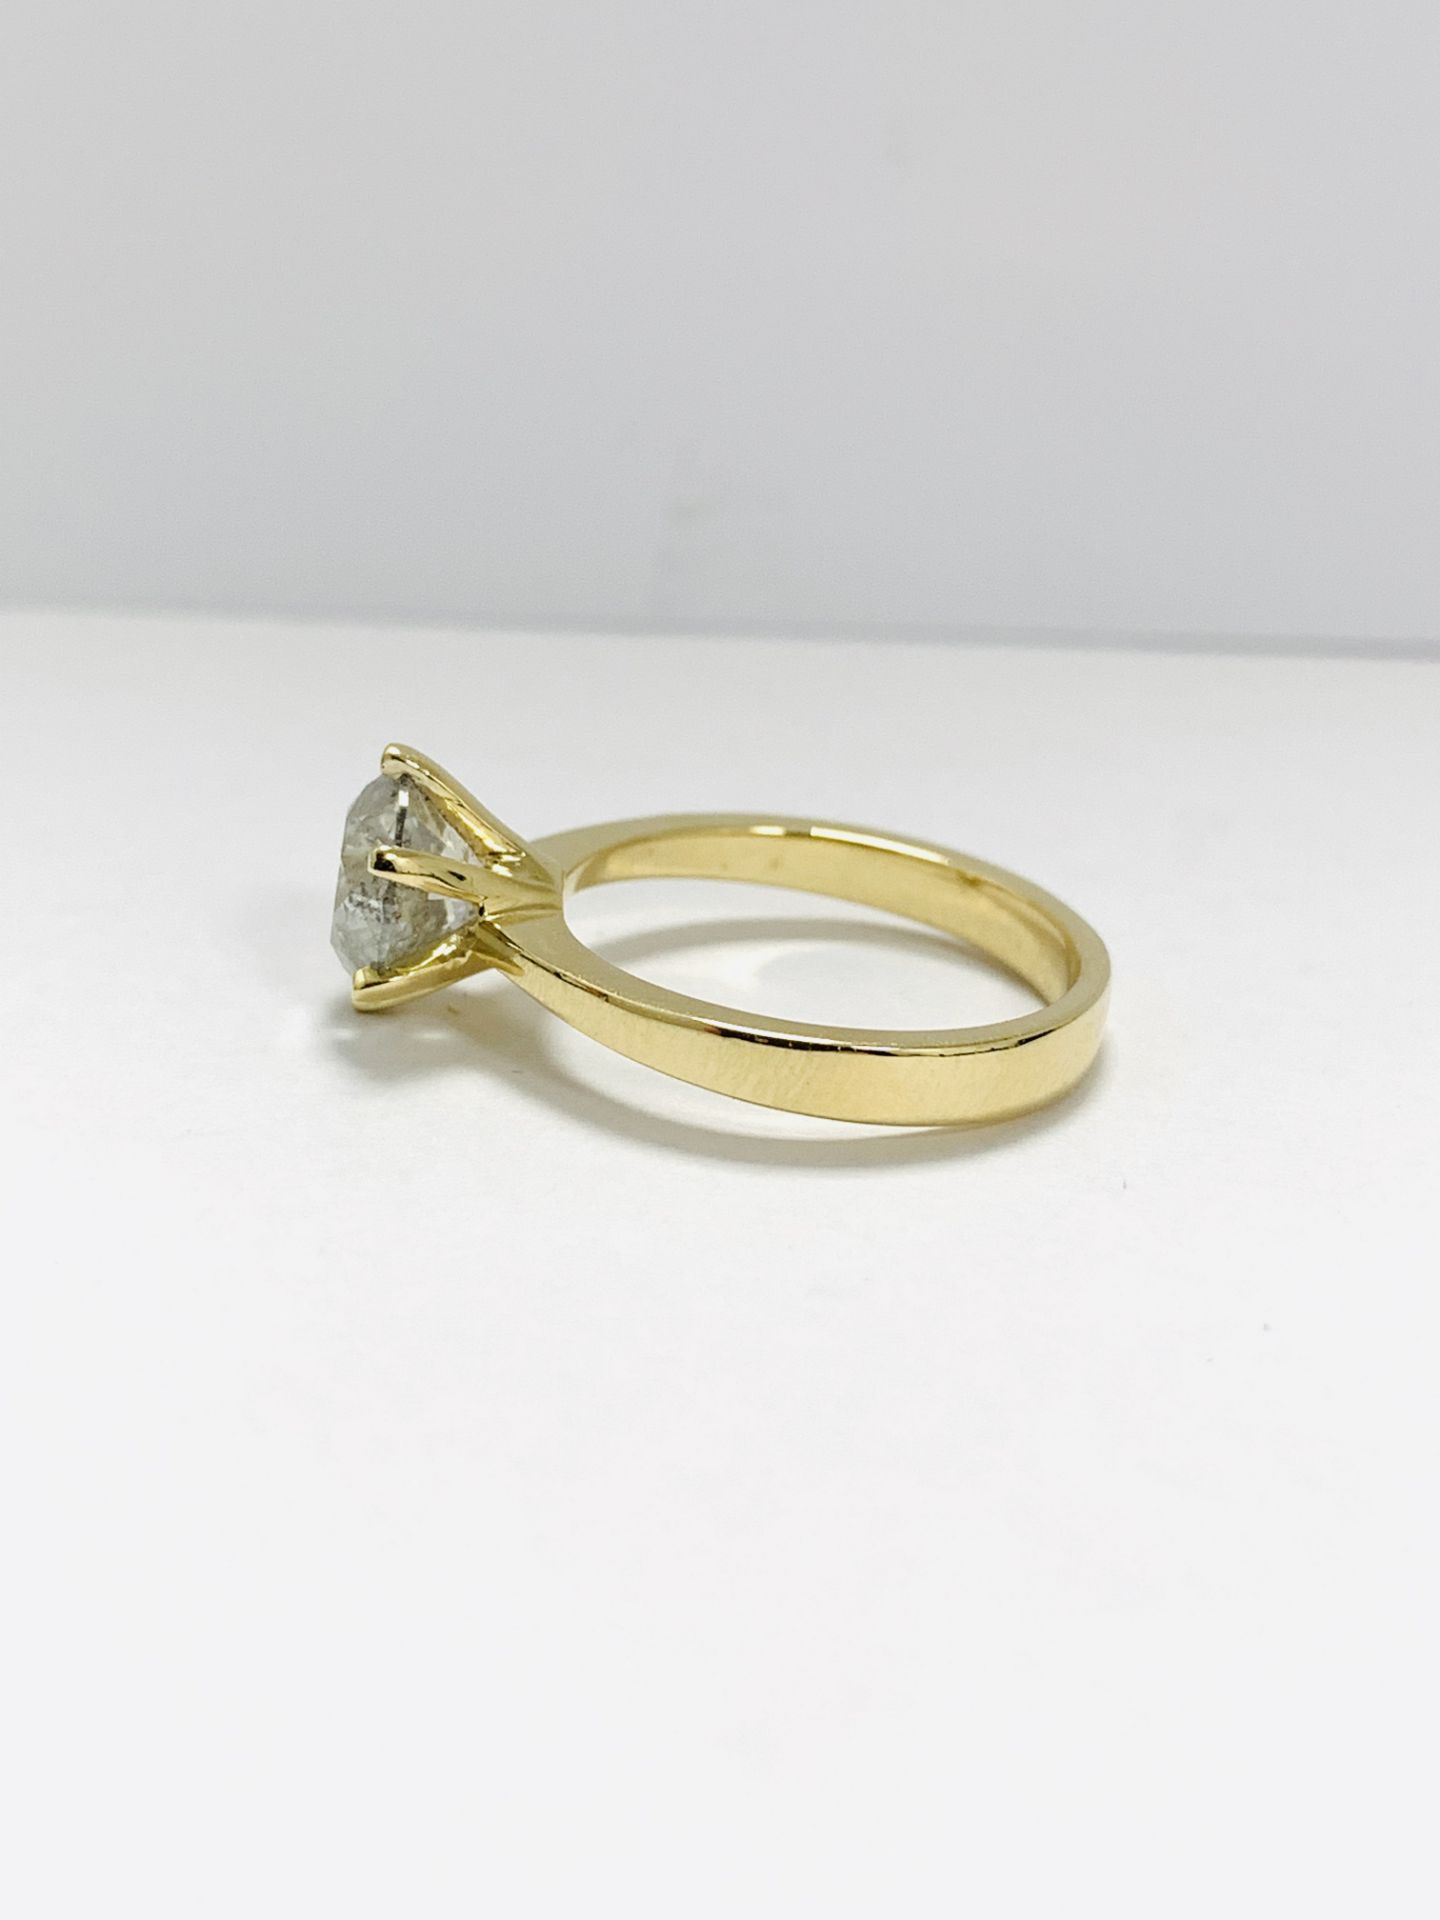 14K Yellow Gold Ring - Image 2 of 5